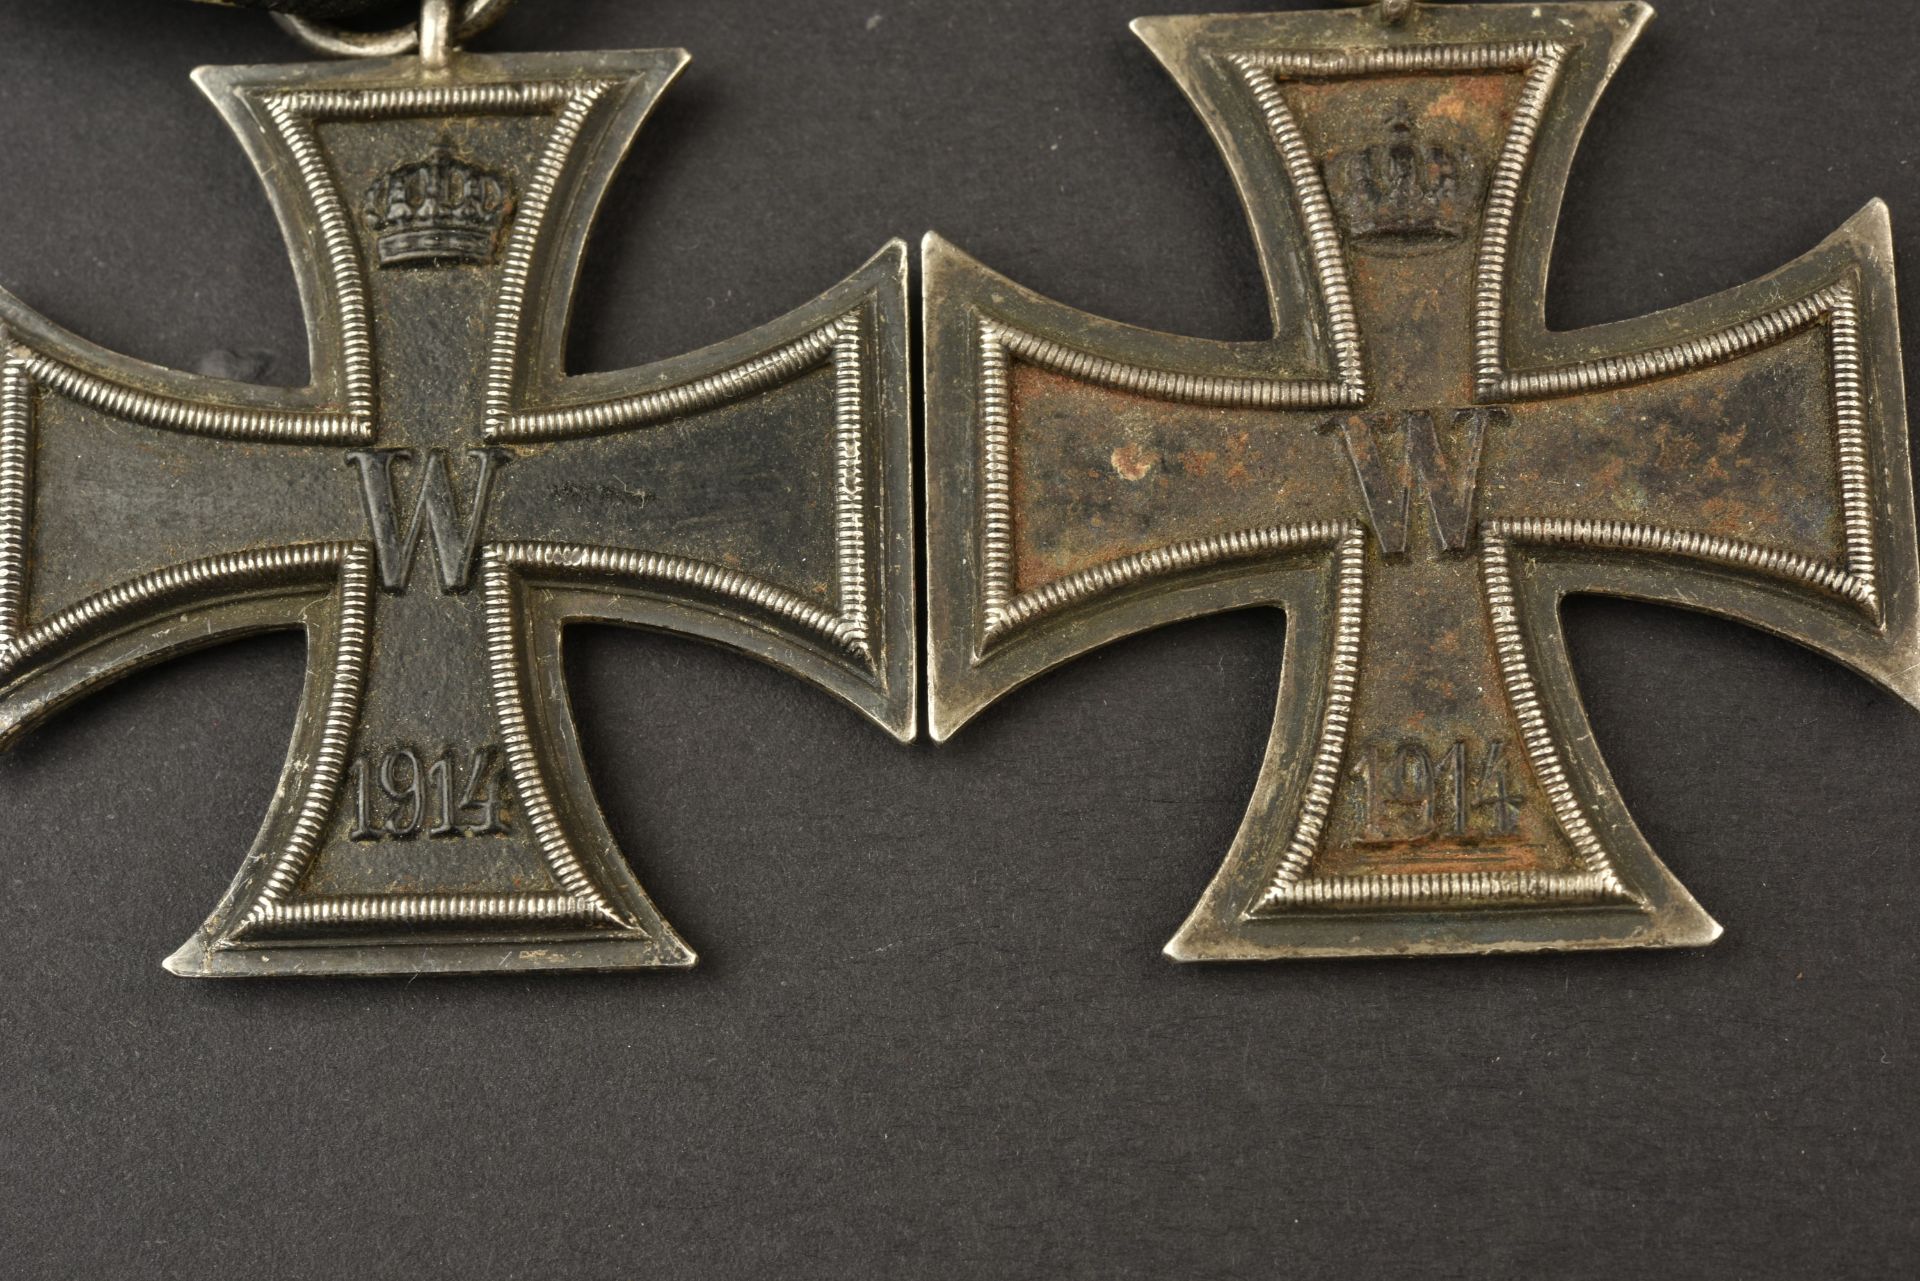 Croix de fer 2nd classe WWI. WWI 2nd Class Iron Cross. - Image 3 of 3